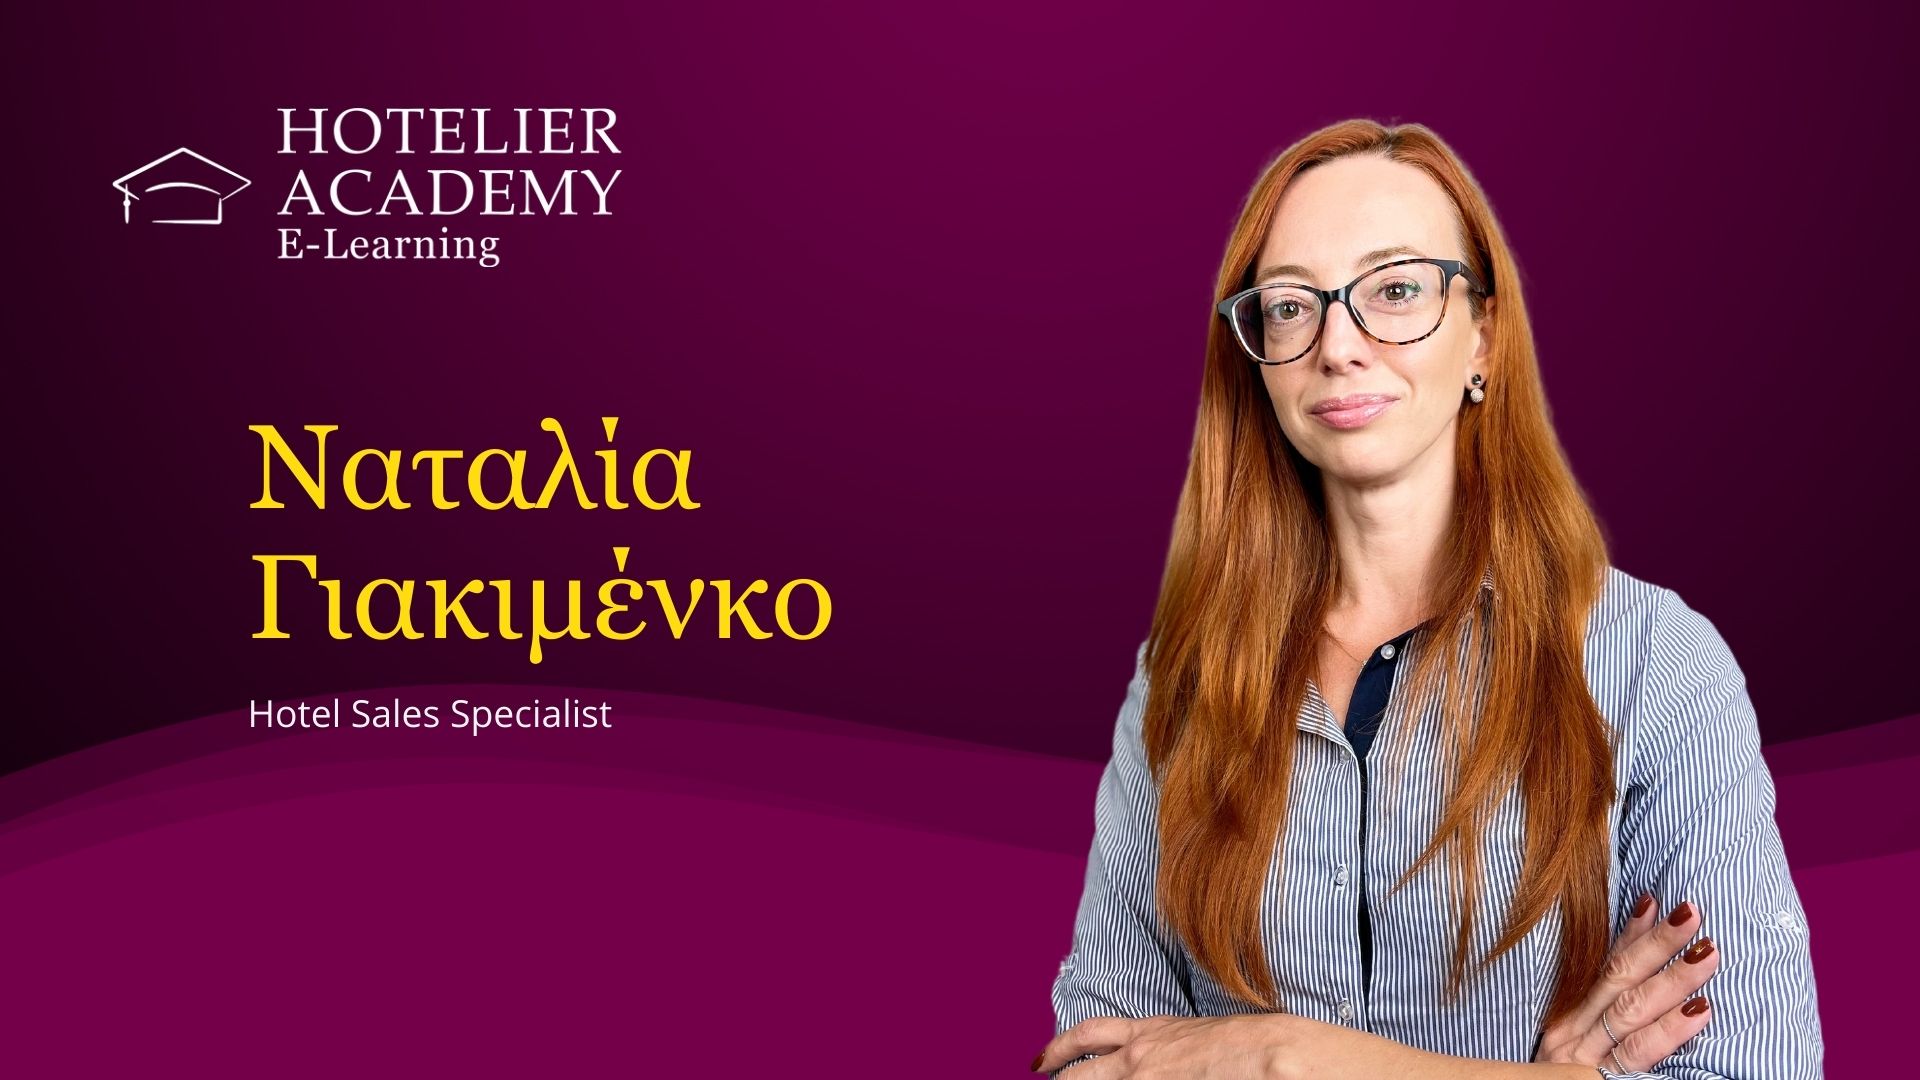 Hotelier Academy Instructor: Ναταλία Γιακιμένκο